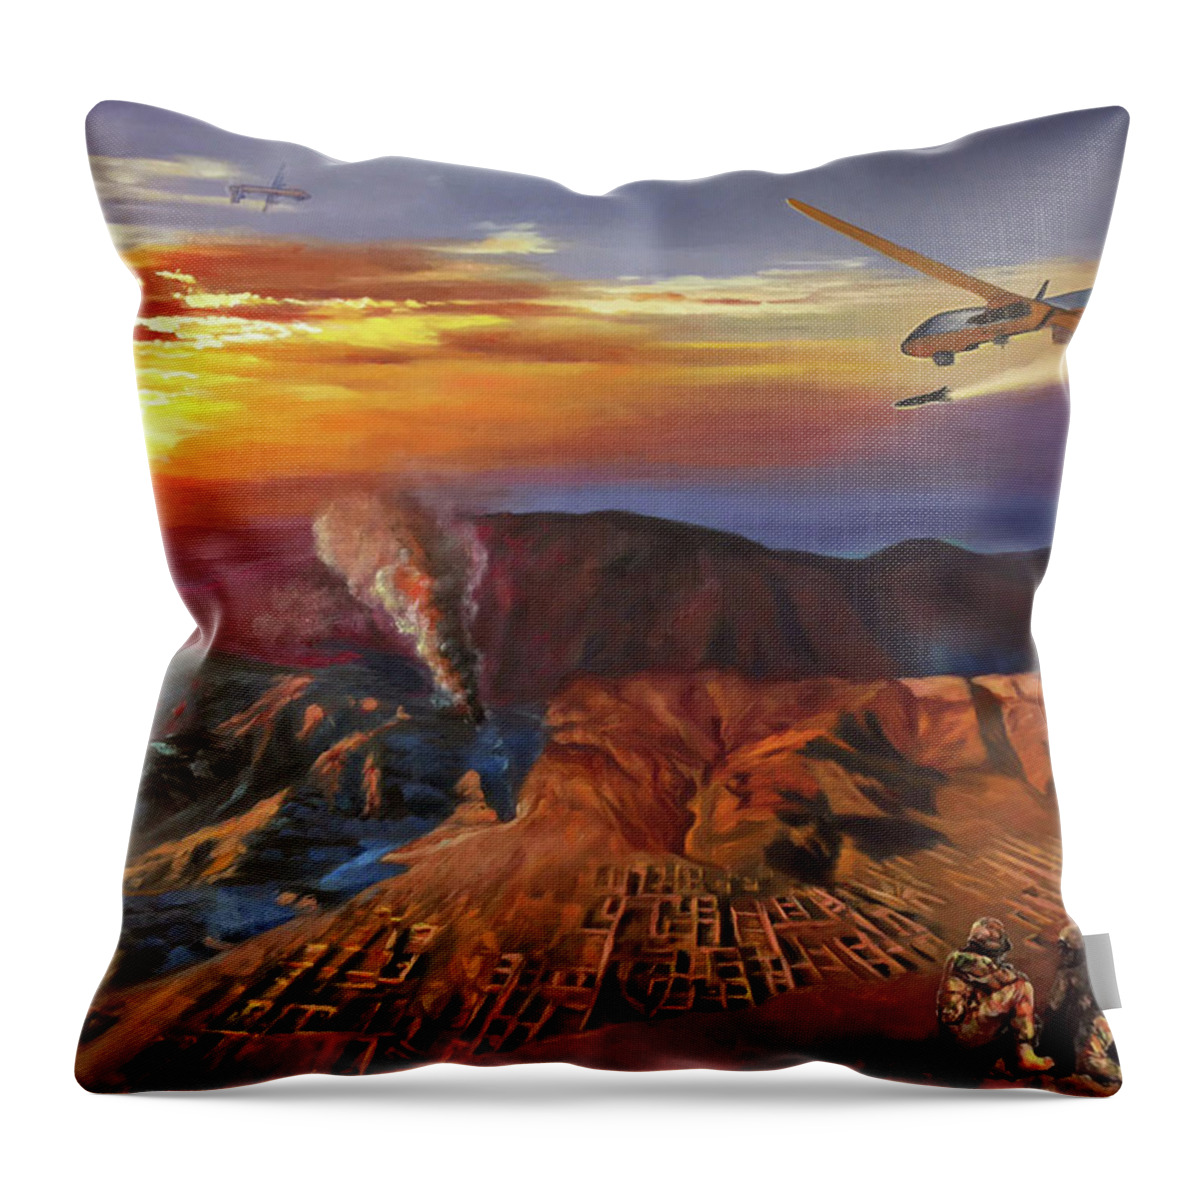 Usaf Art Throw Pillow featuring the painting Dragon Dawn MQ1 Predator by Todd Krasovetz